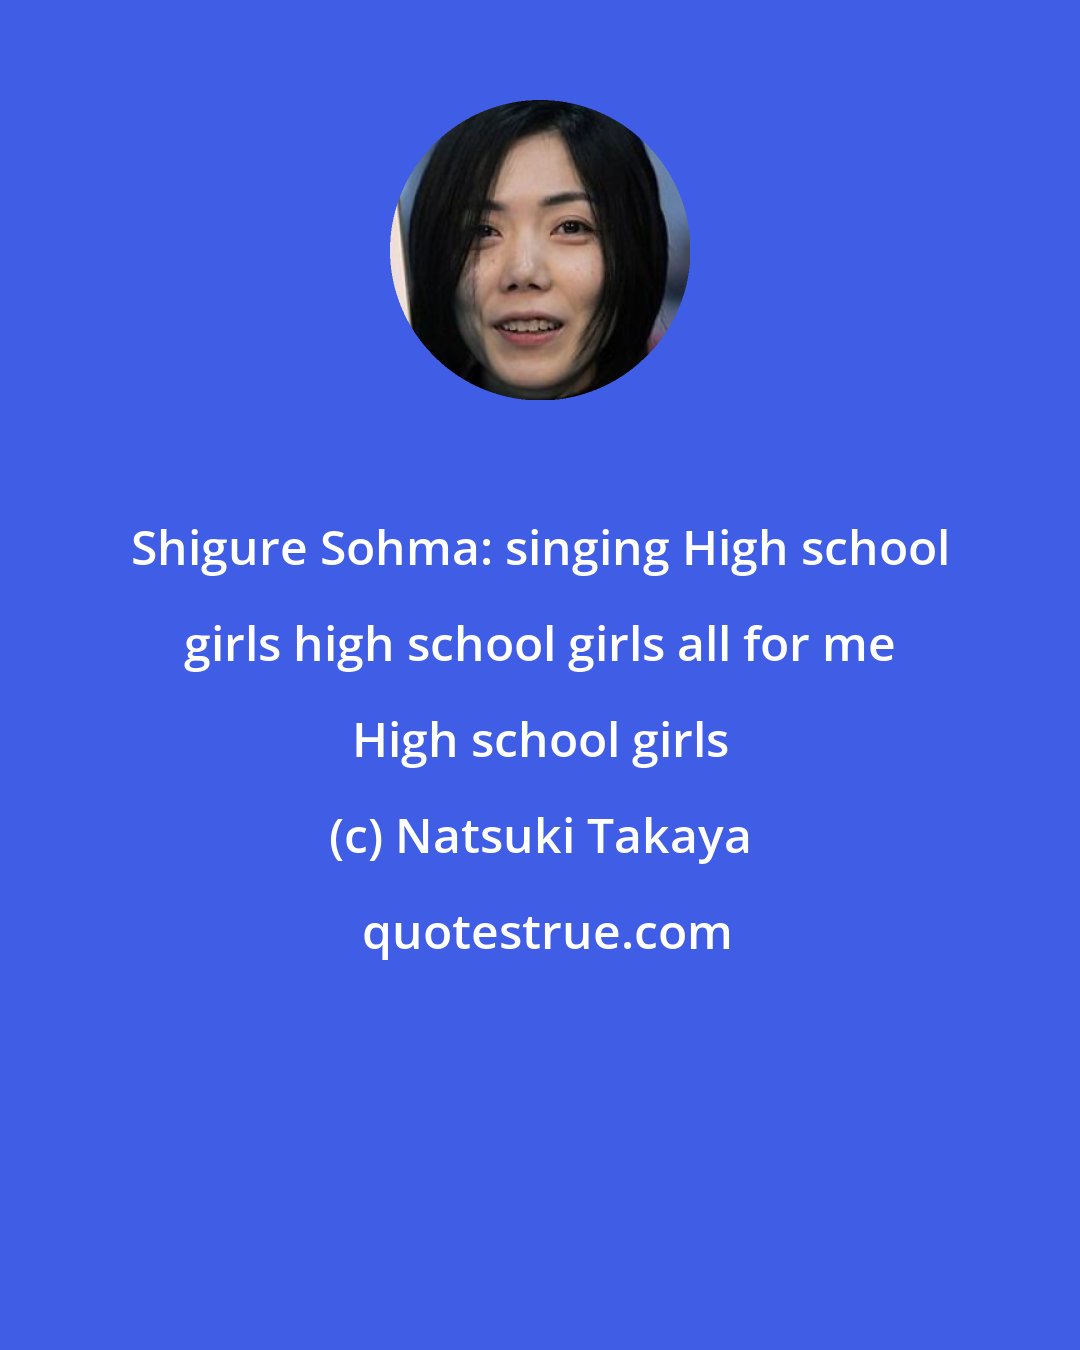 Natsuki Takaya: Shigure Sohma: singing High school girls high school girls all for me High school girls